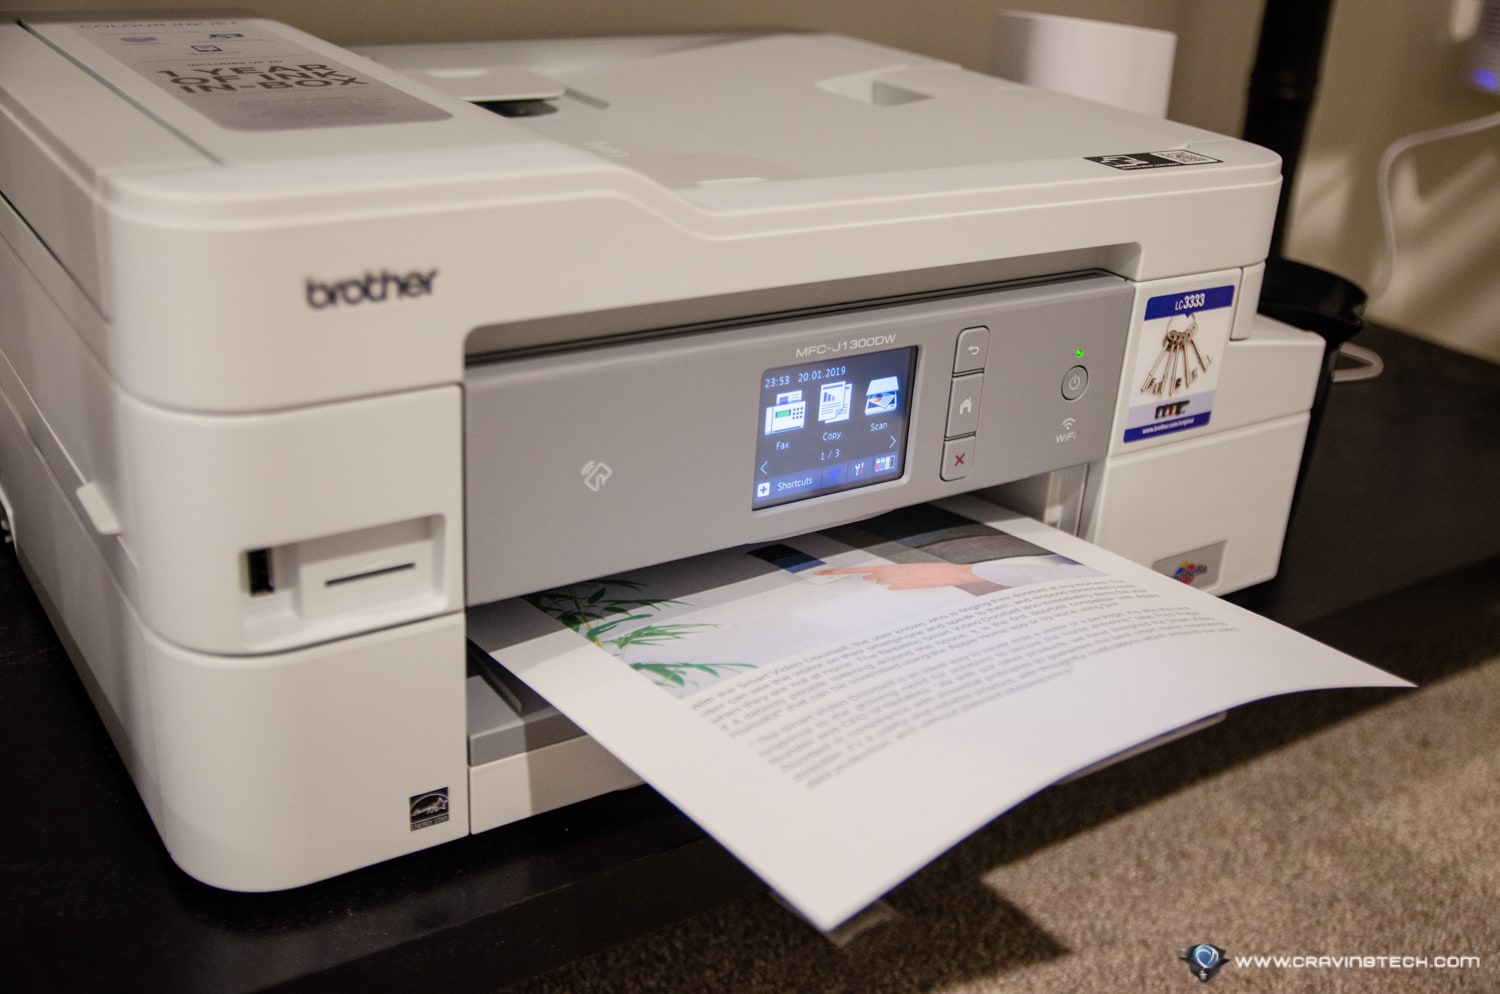 brother printer 1300